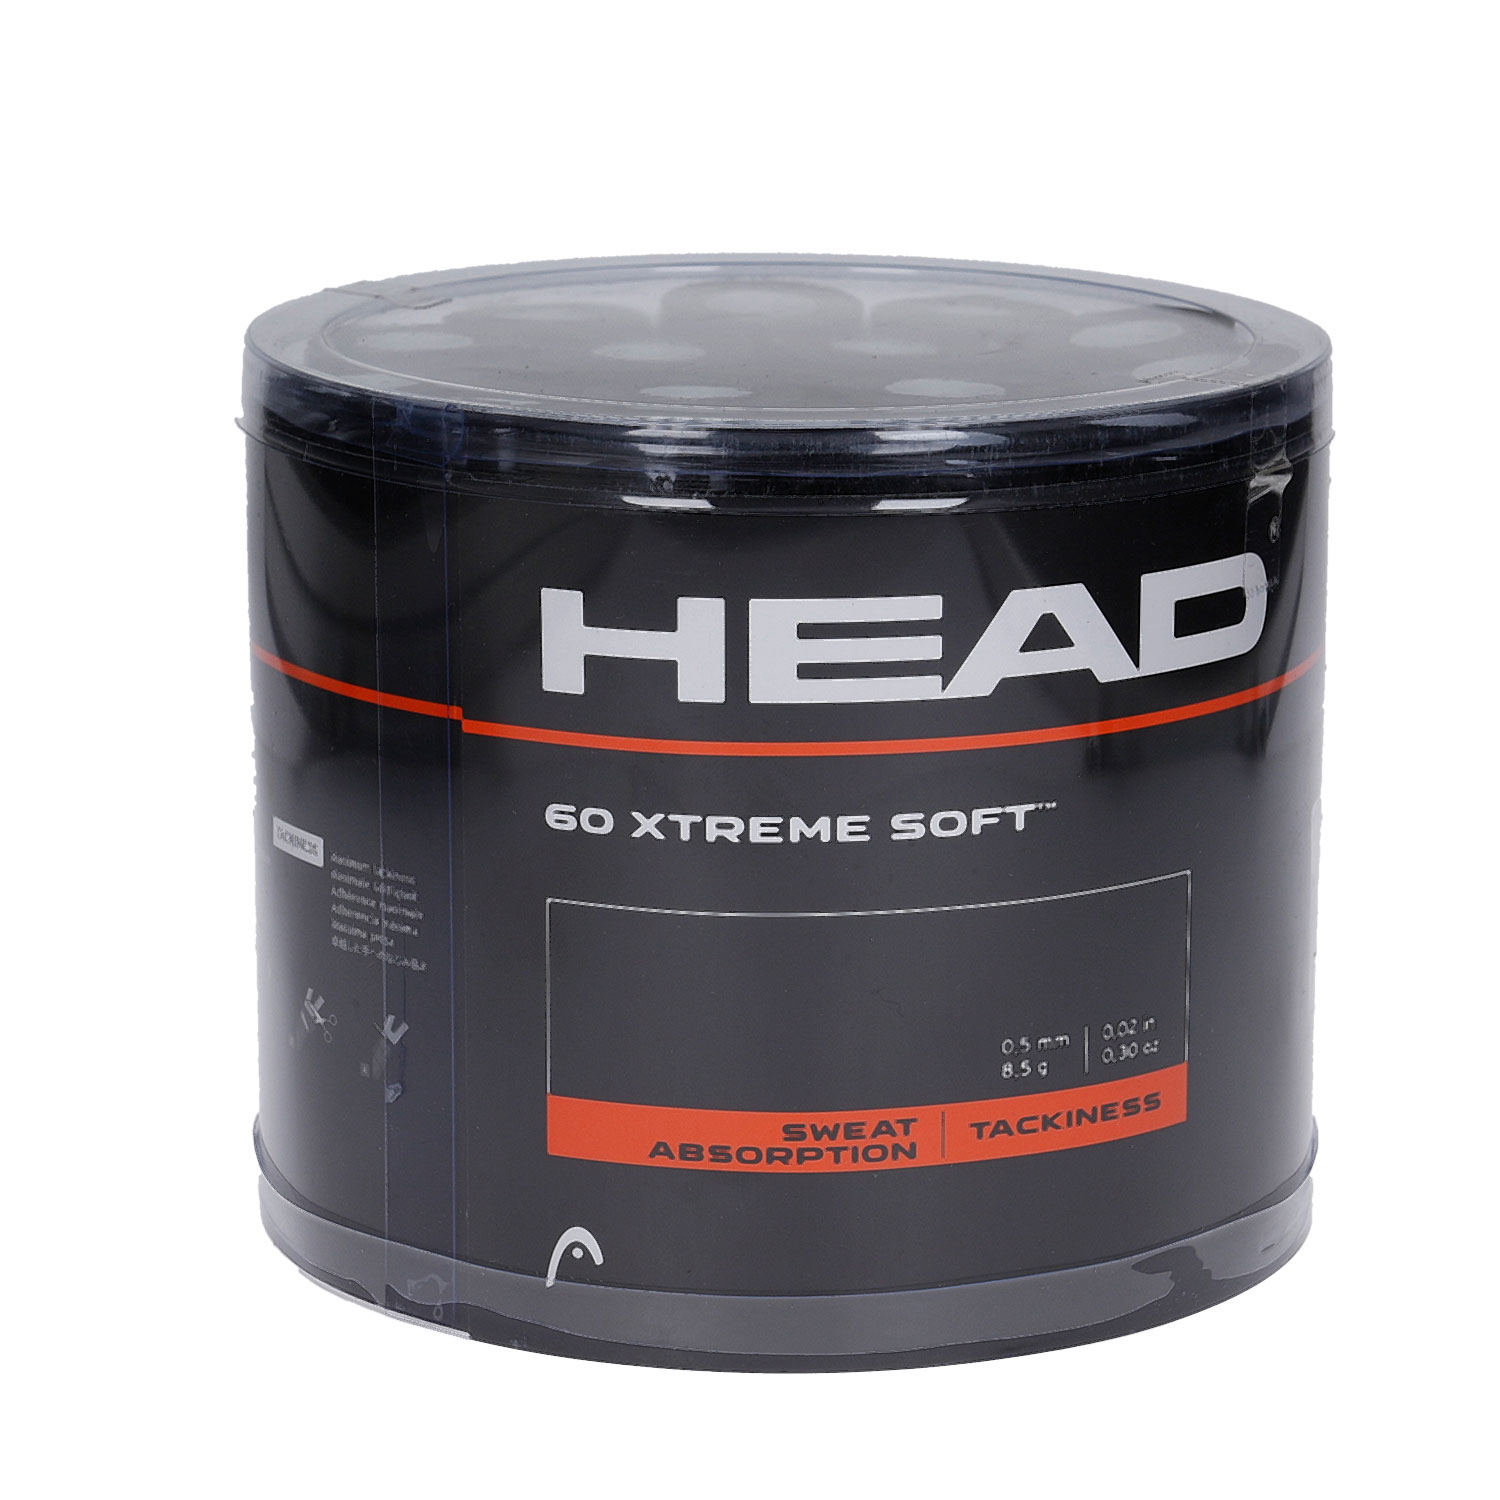 Head Xtreme Soft x 60 Box Overgrip - Black